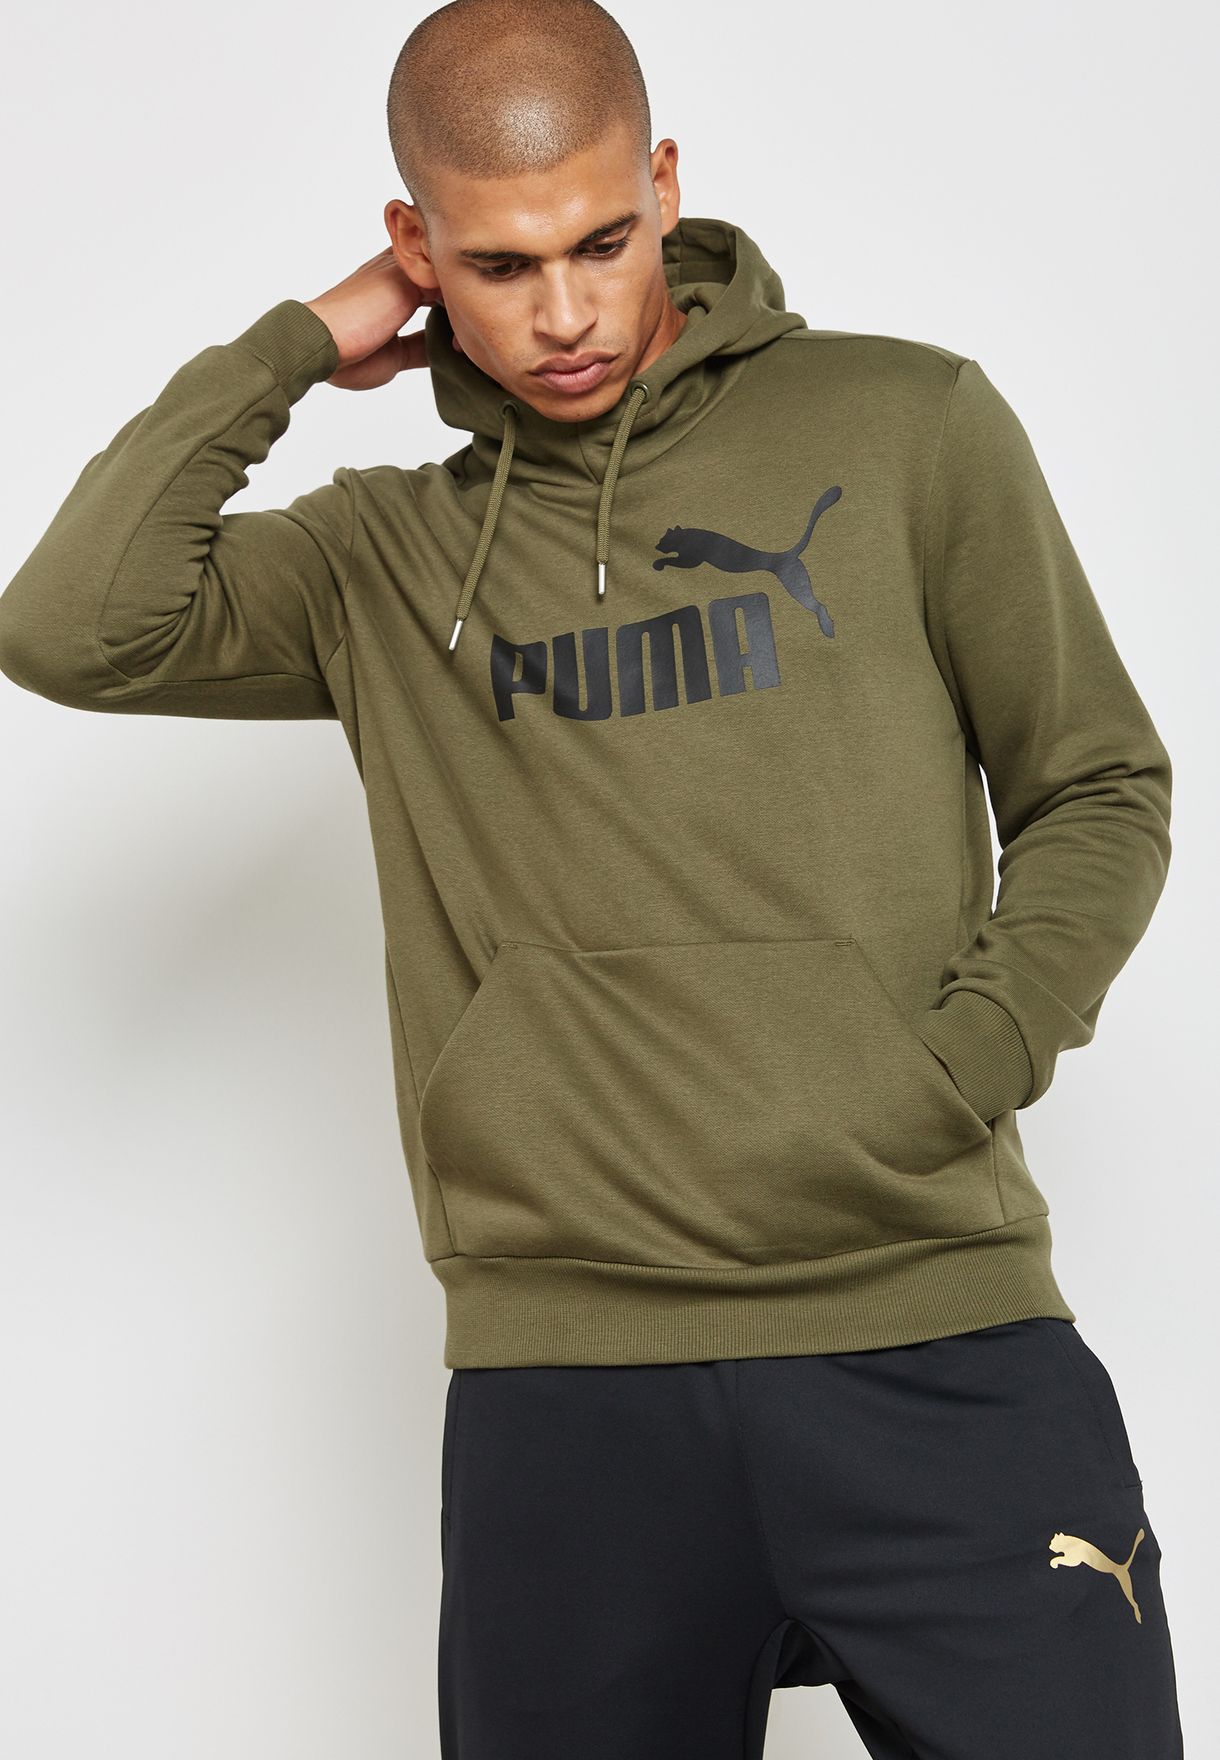 green puma hoodie mens - 61% OFF 